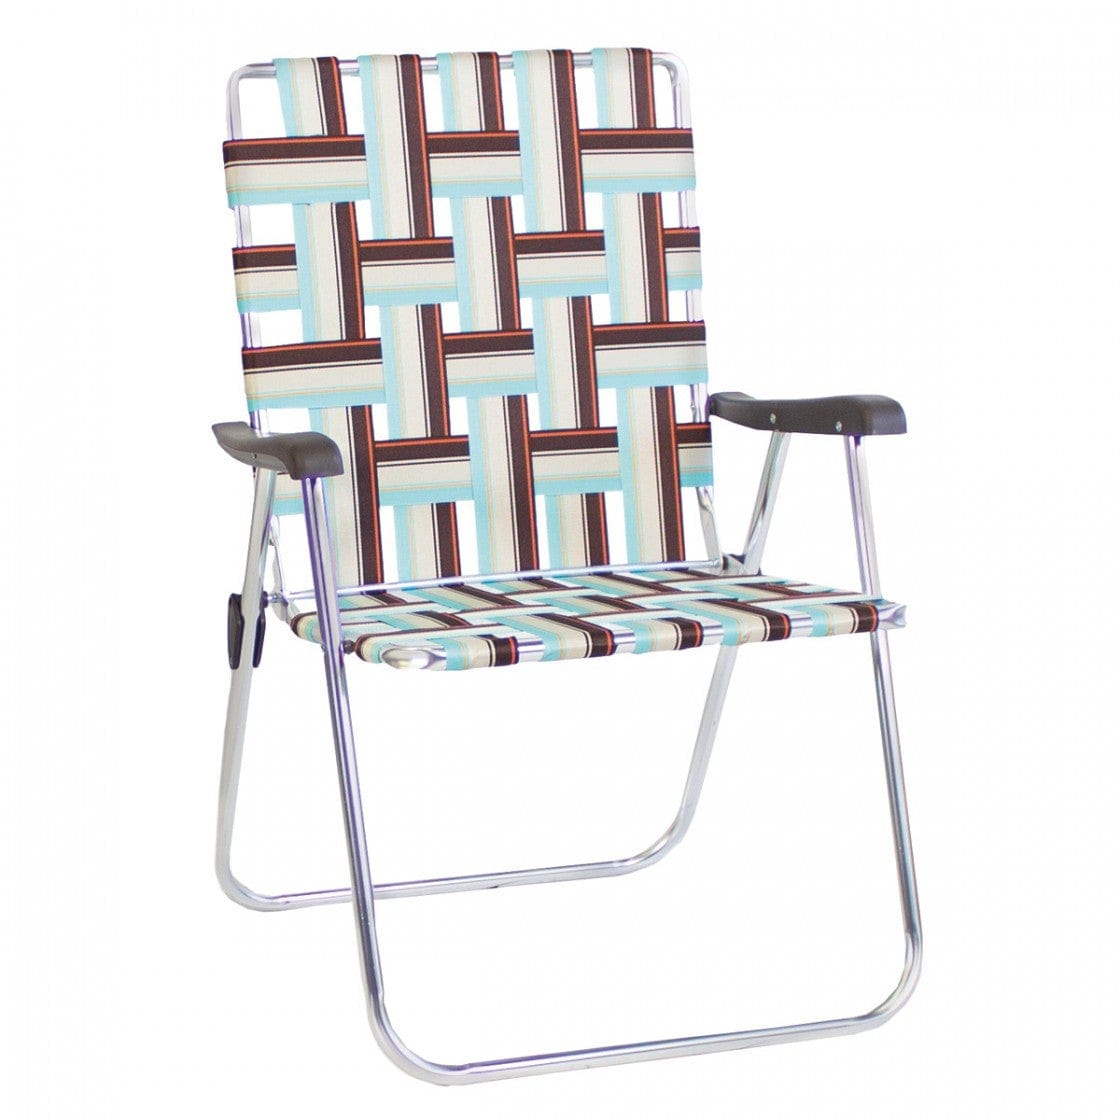 Kuma Outdoor Gear Furniture - Chairs Fez Backtrack Chair- Teal/Brown